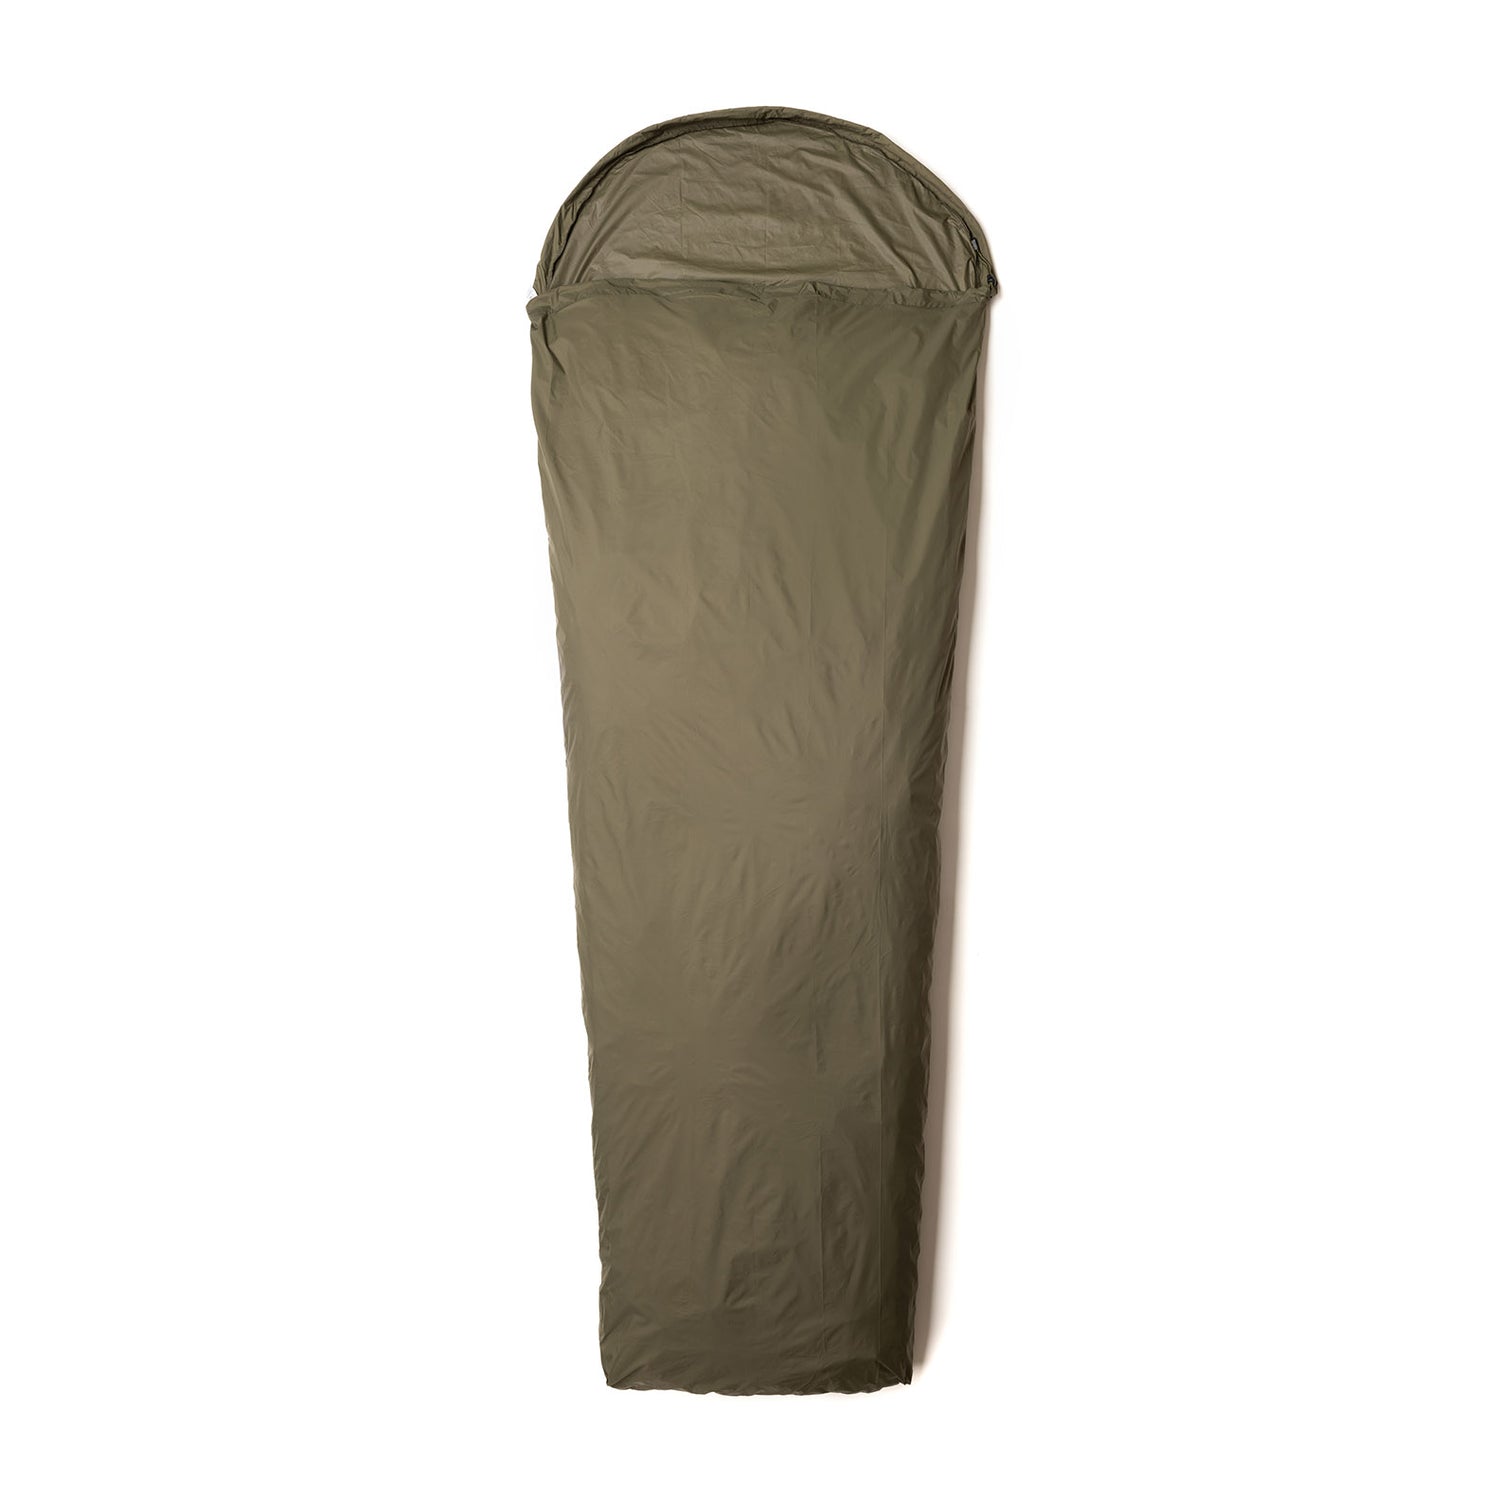 Snugpak Bivvi Bag Waterproof Sleeping Bag Outer Shell